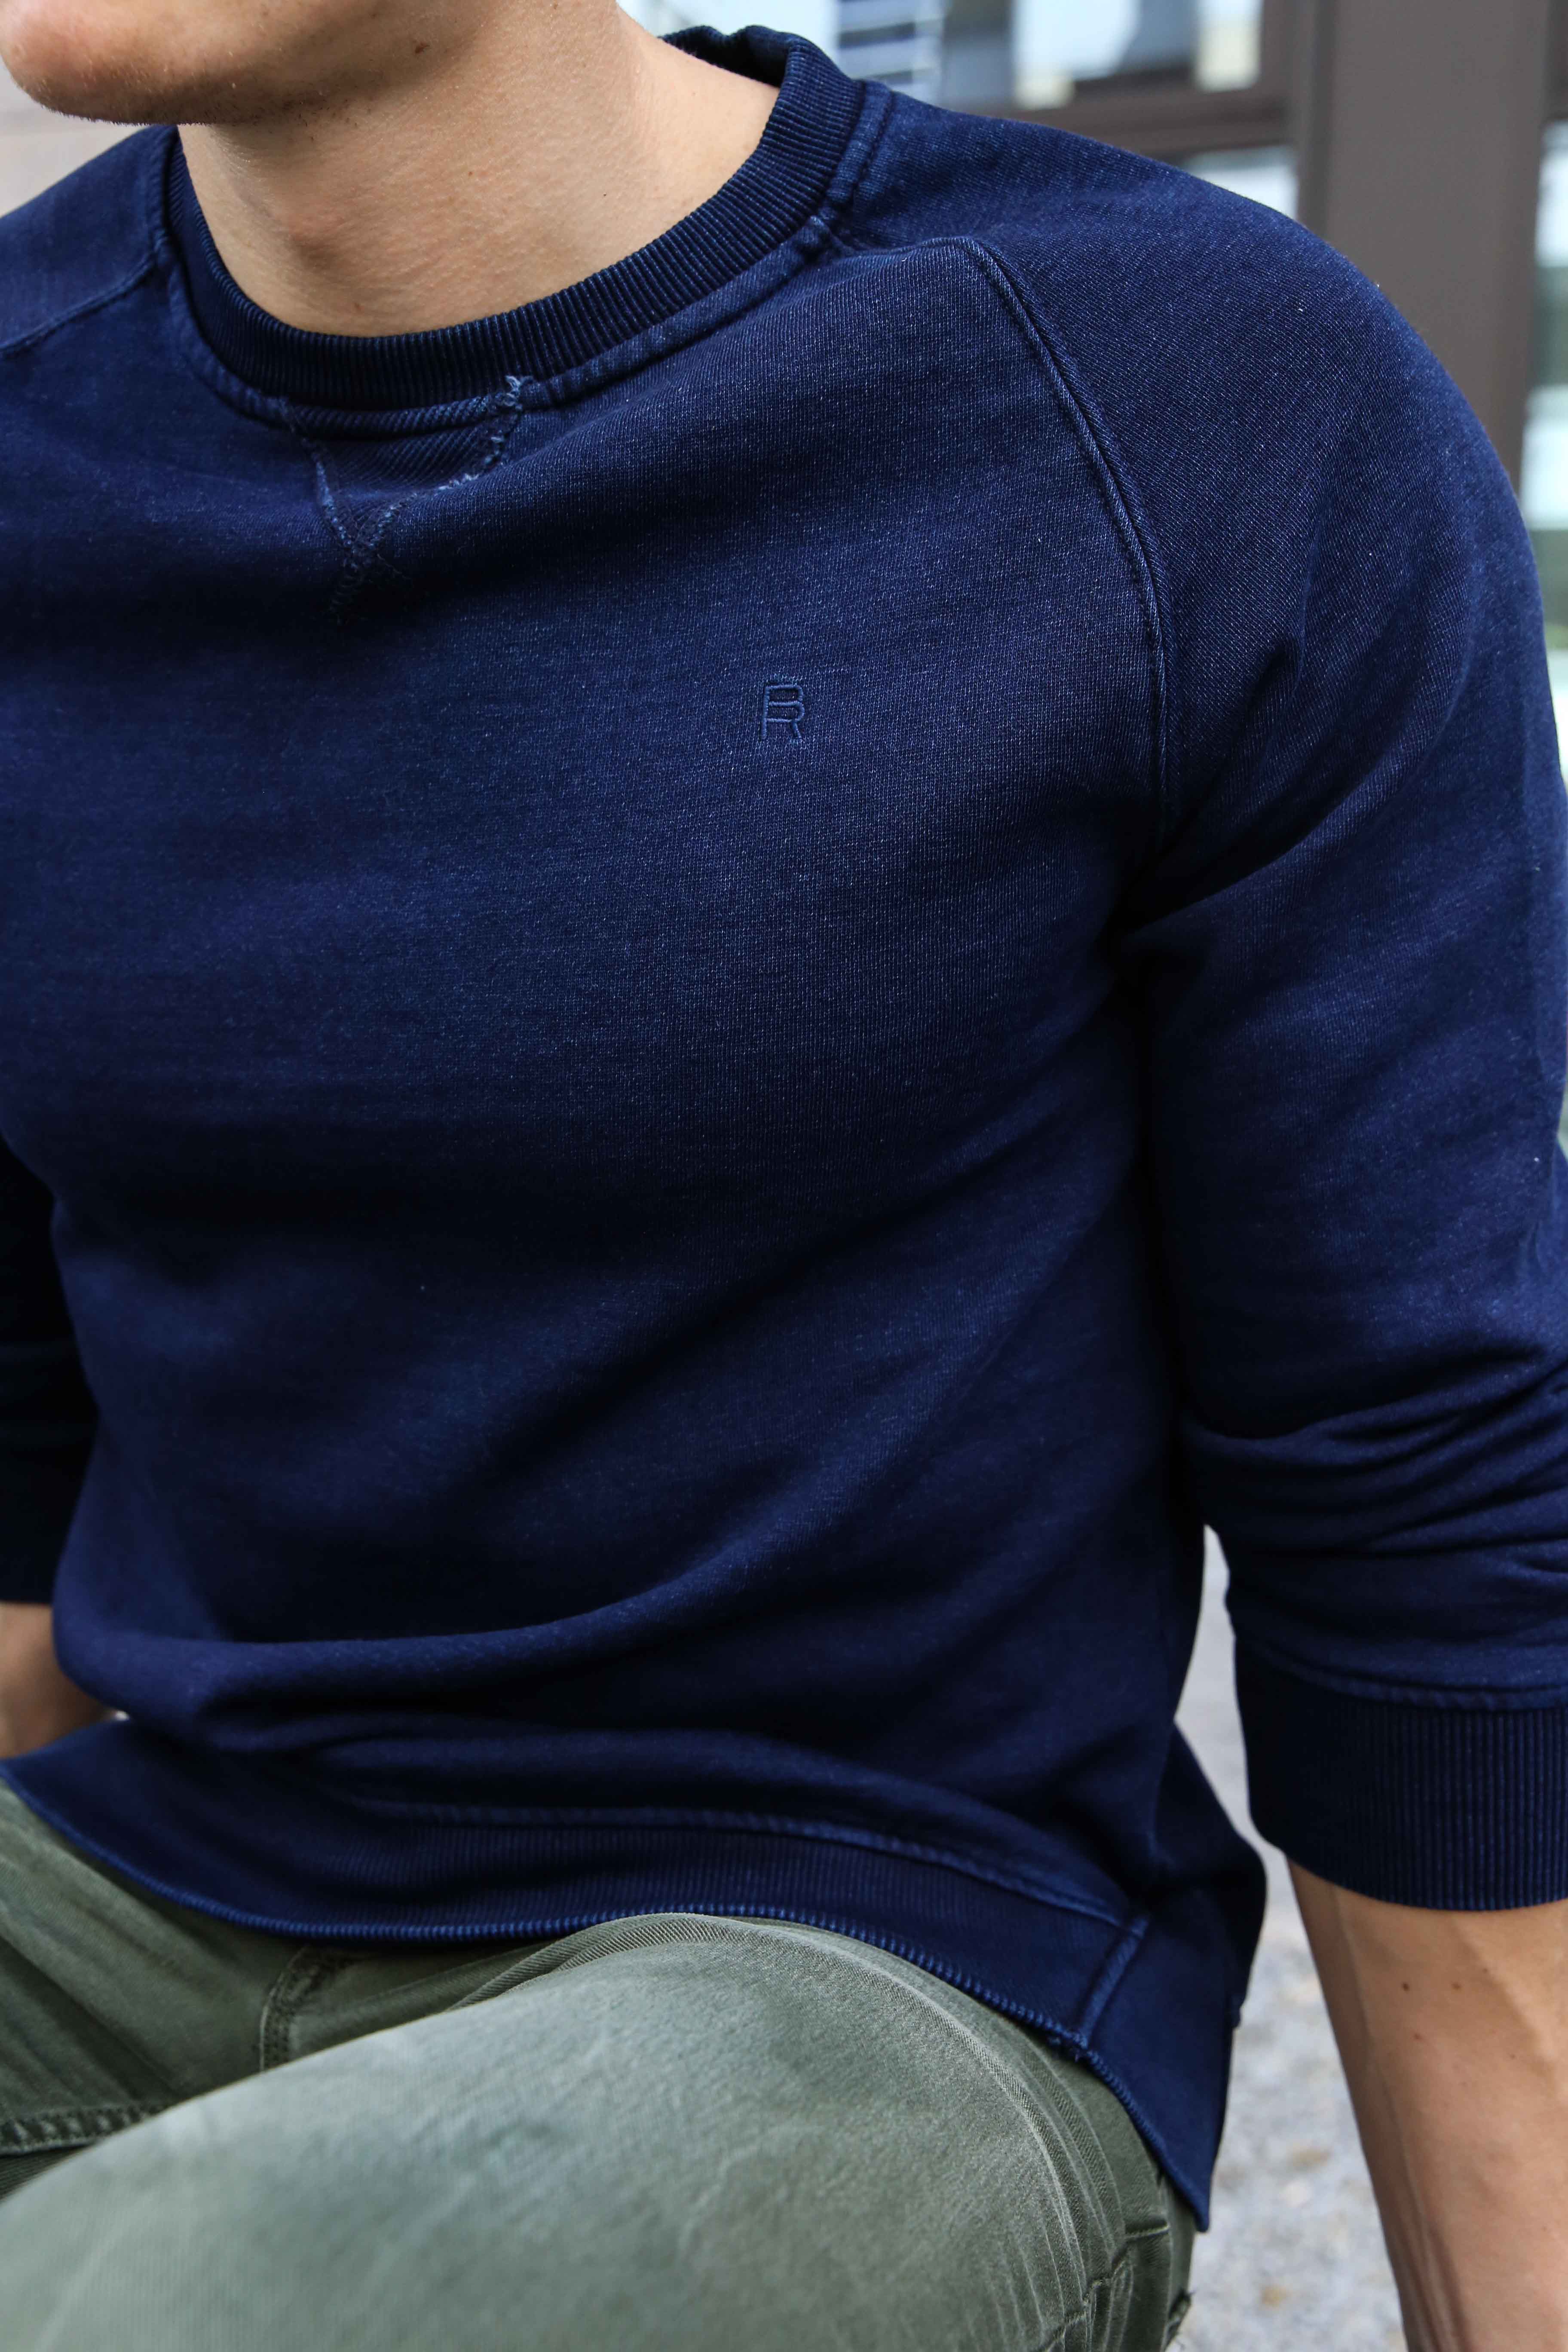 herbst-look-sweatshirt-indigo-blau-washed-skinny-jeans-grün-modeblog-männerblog-berlin_0174